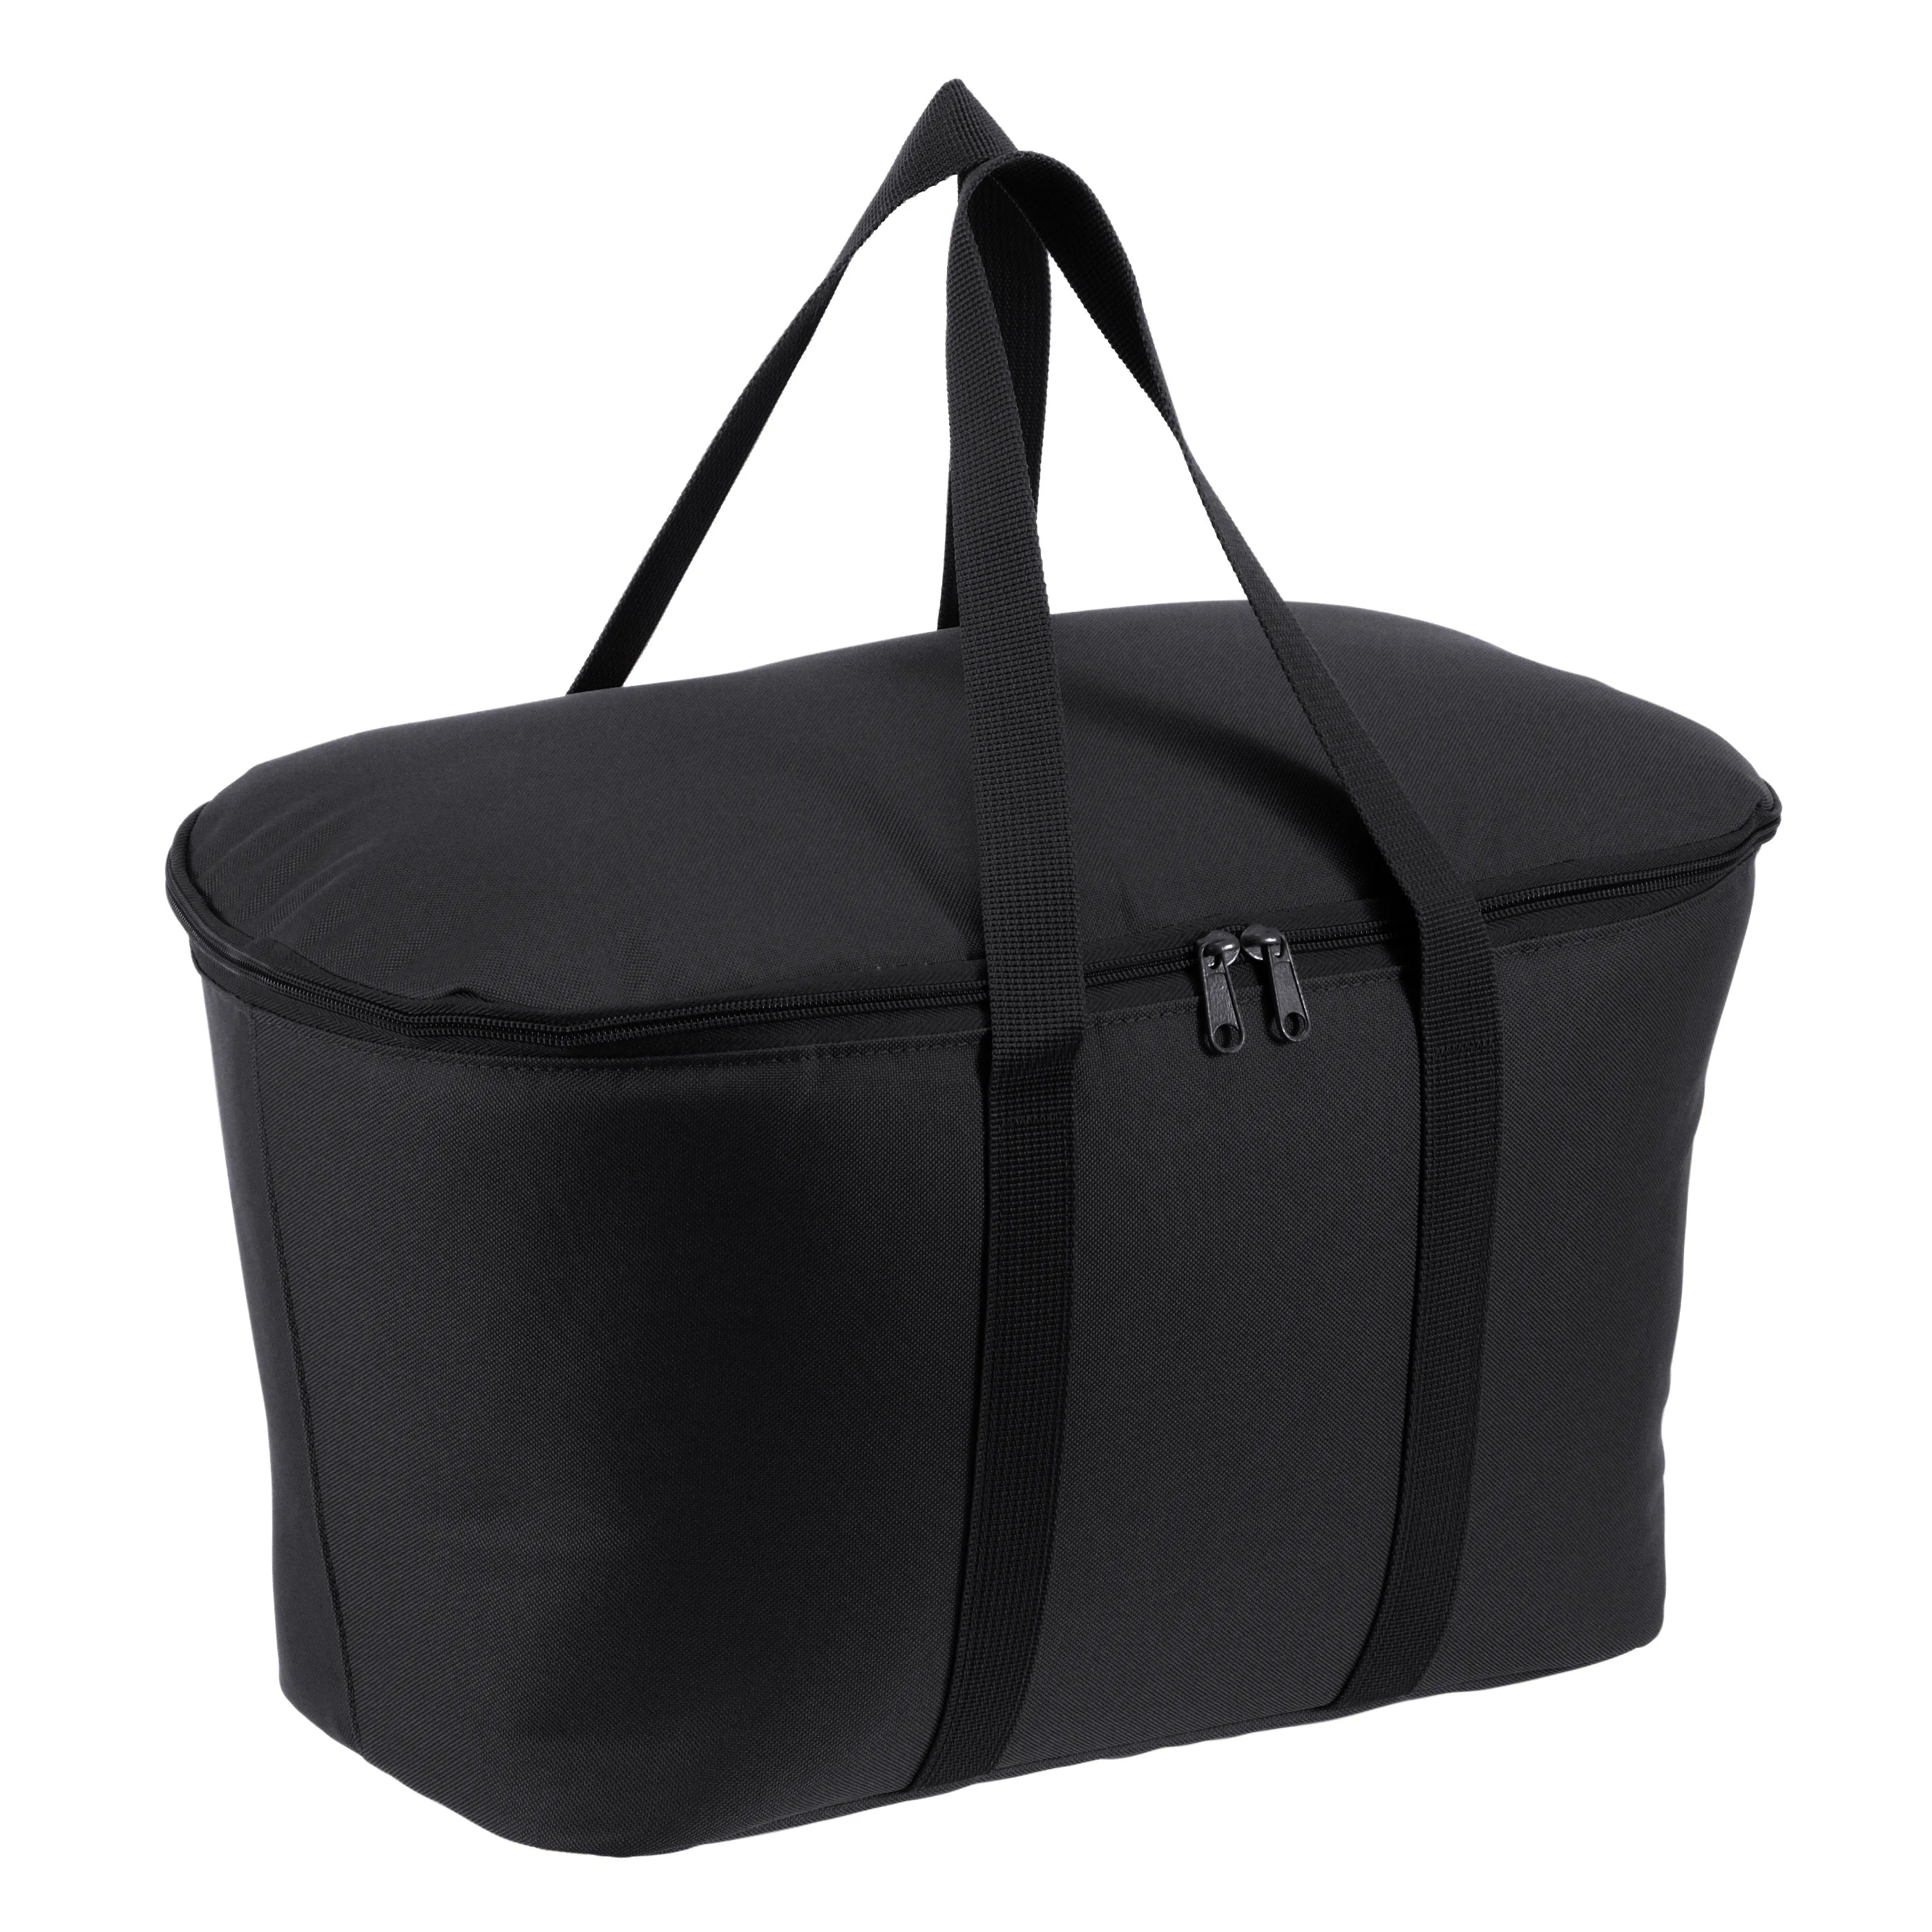 Reisenthel Shopping Coolerbag Kühltasche 44 cm - black